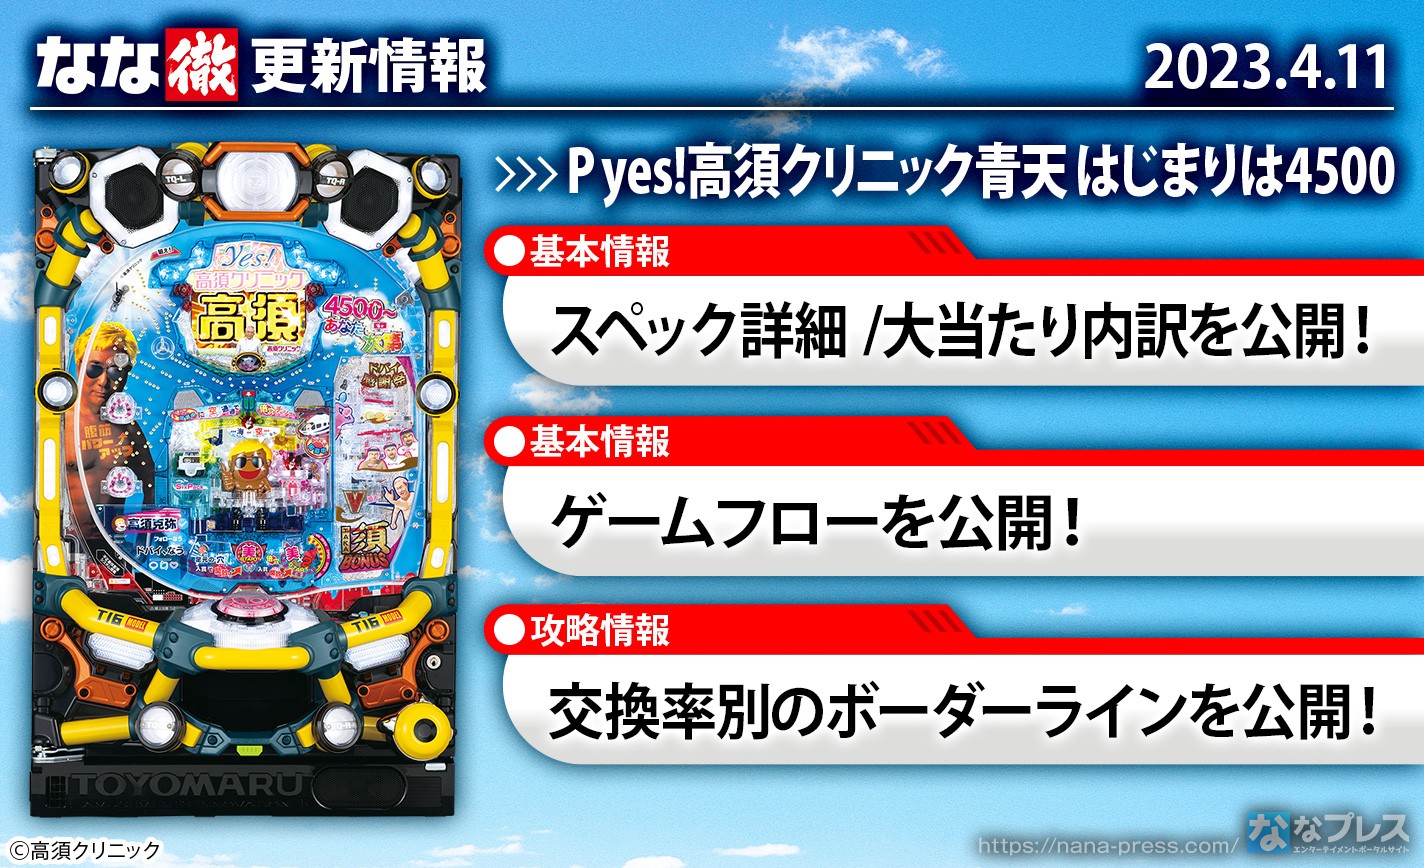 【P yes!高須クリニック青天 はじまりは4500】機種ページを公開しました。【4月11日解析情報更新】 eyecatch-image